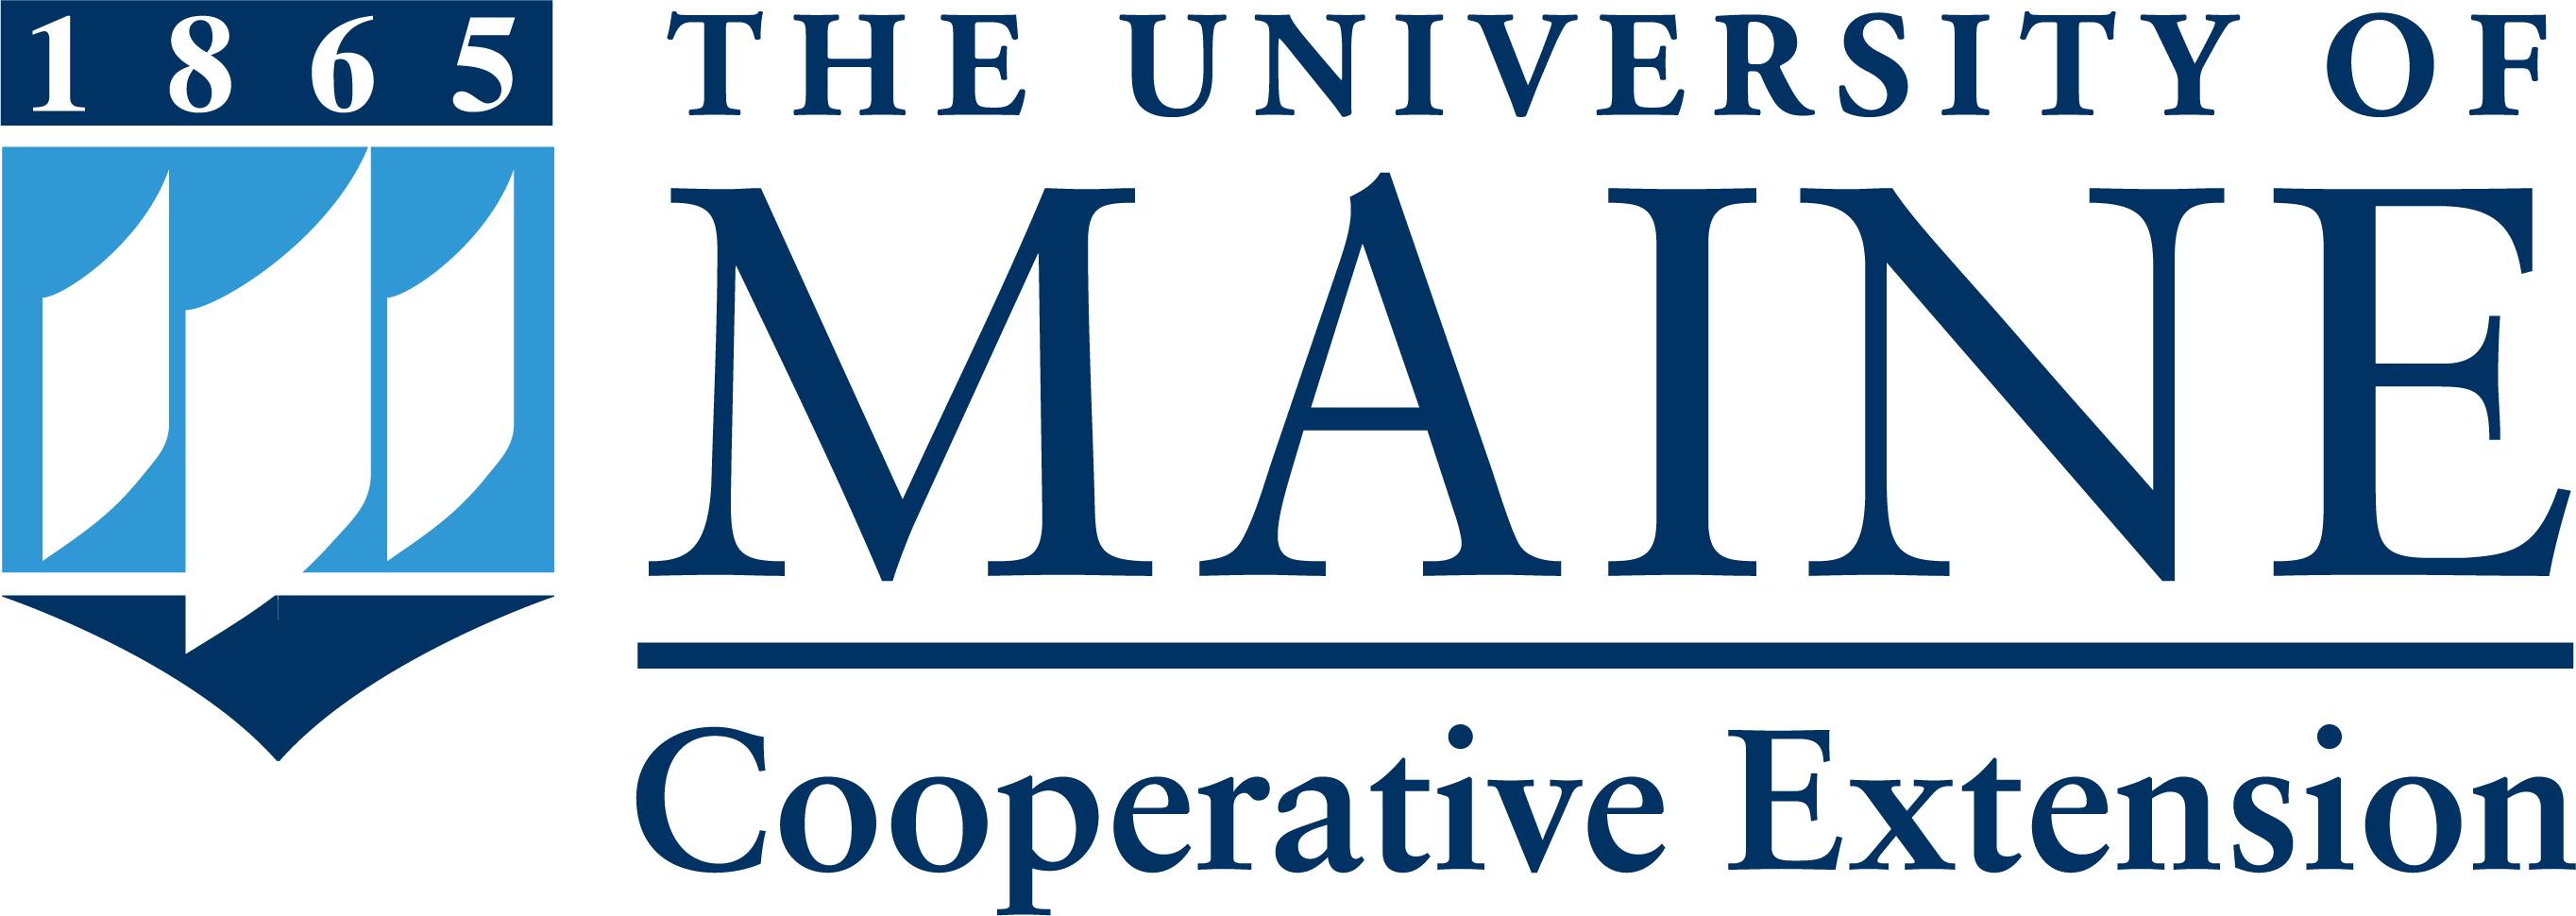 Me extension. University of Maine requirements. Marine Scientific Center logo. University of Maine at Farmington. University Yard.